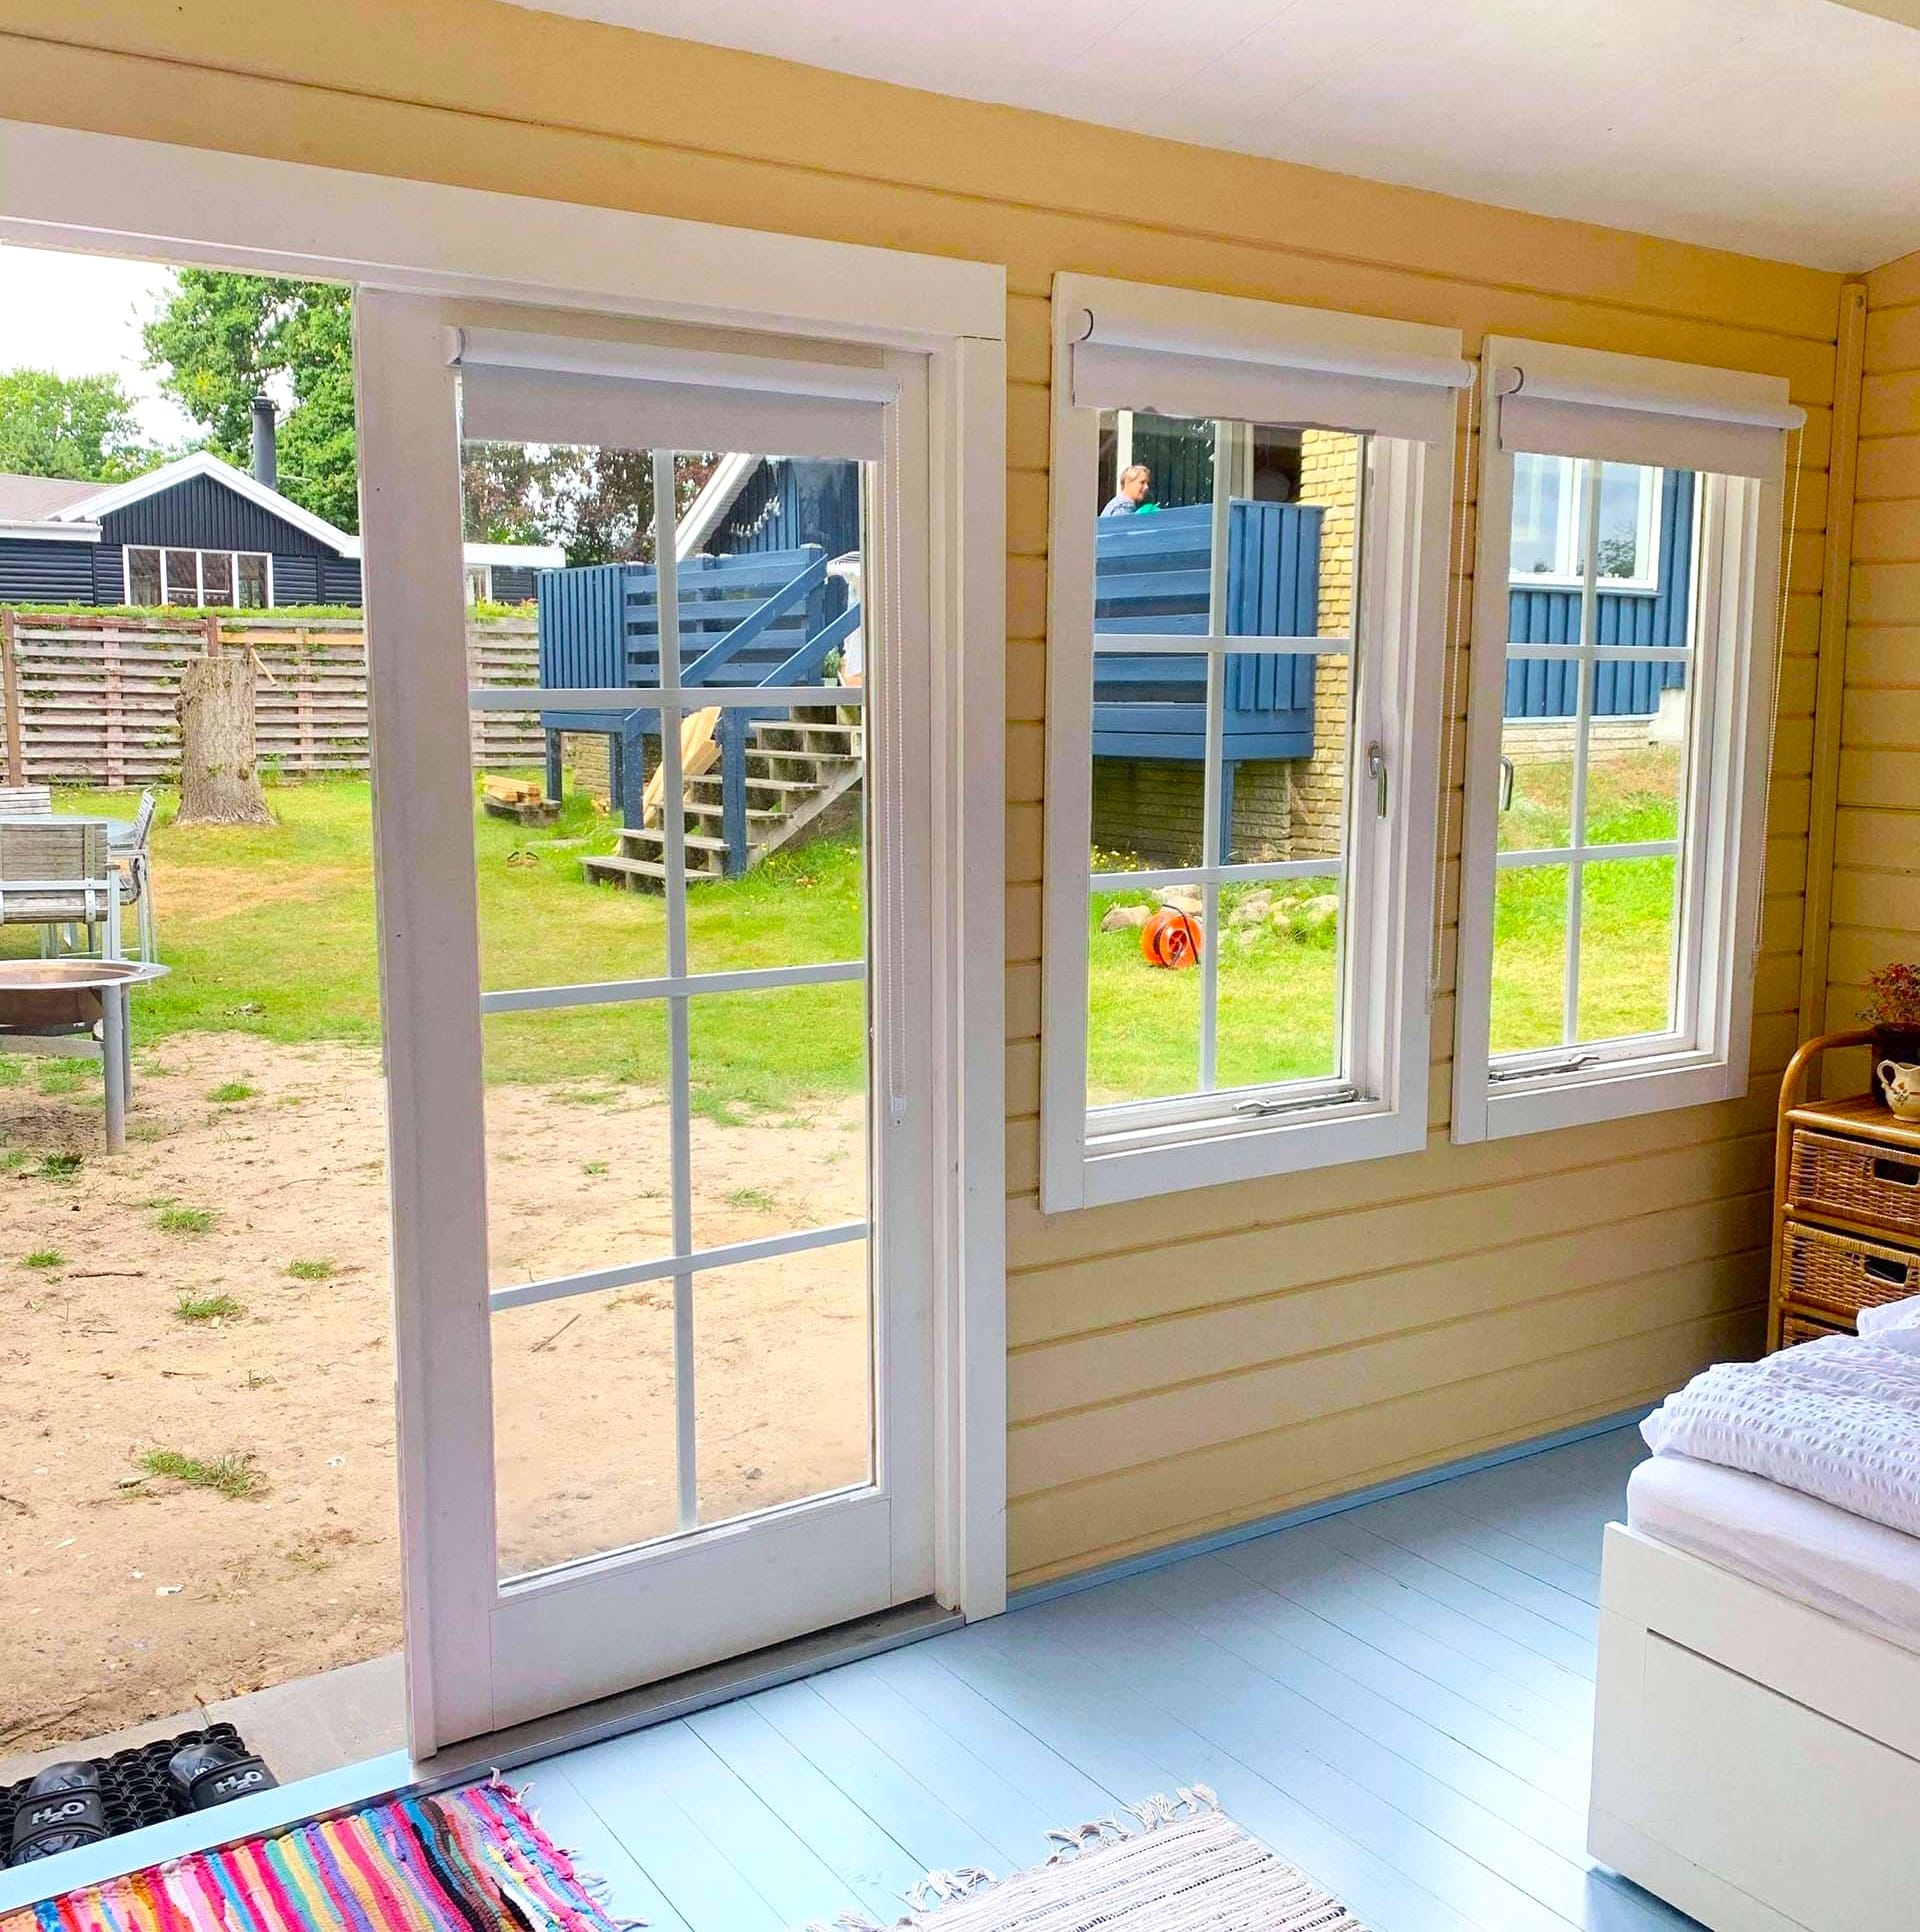 Iris B kvalitets havehus med store vinduer fra Sølund Huse